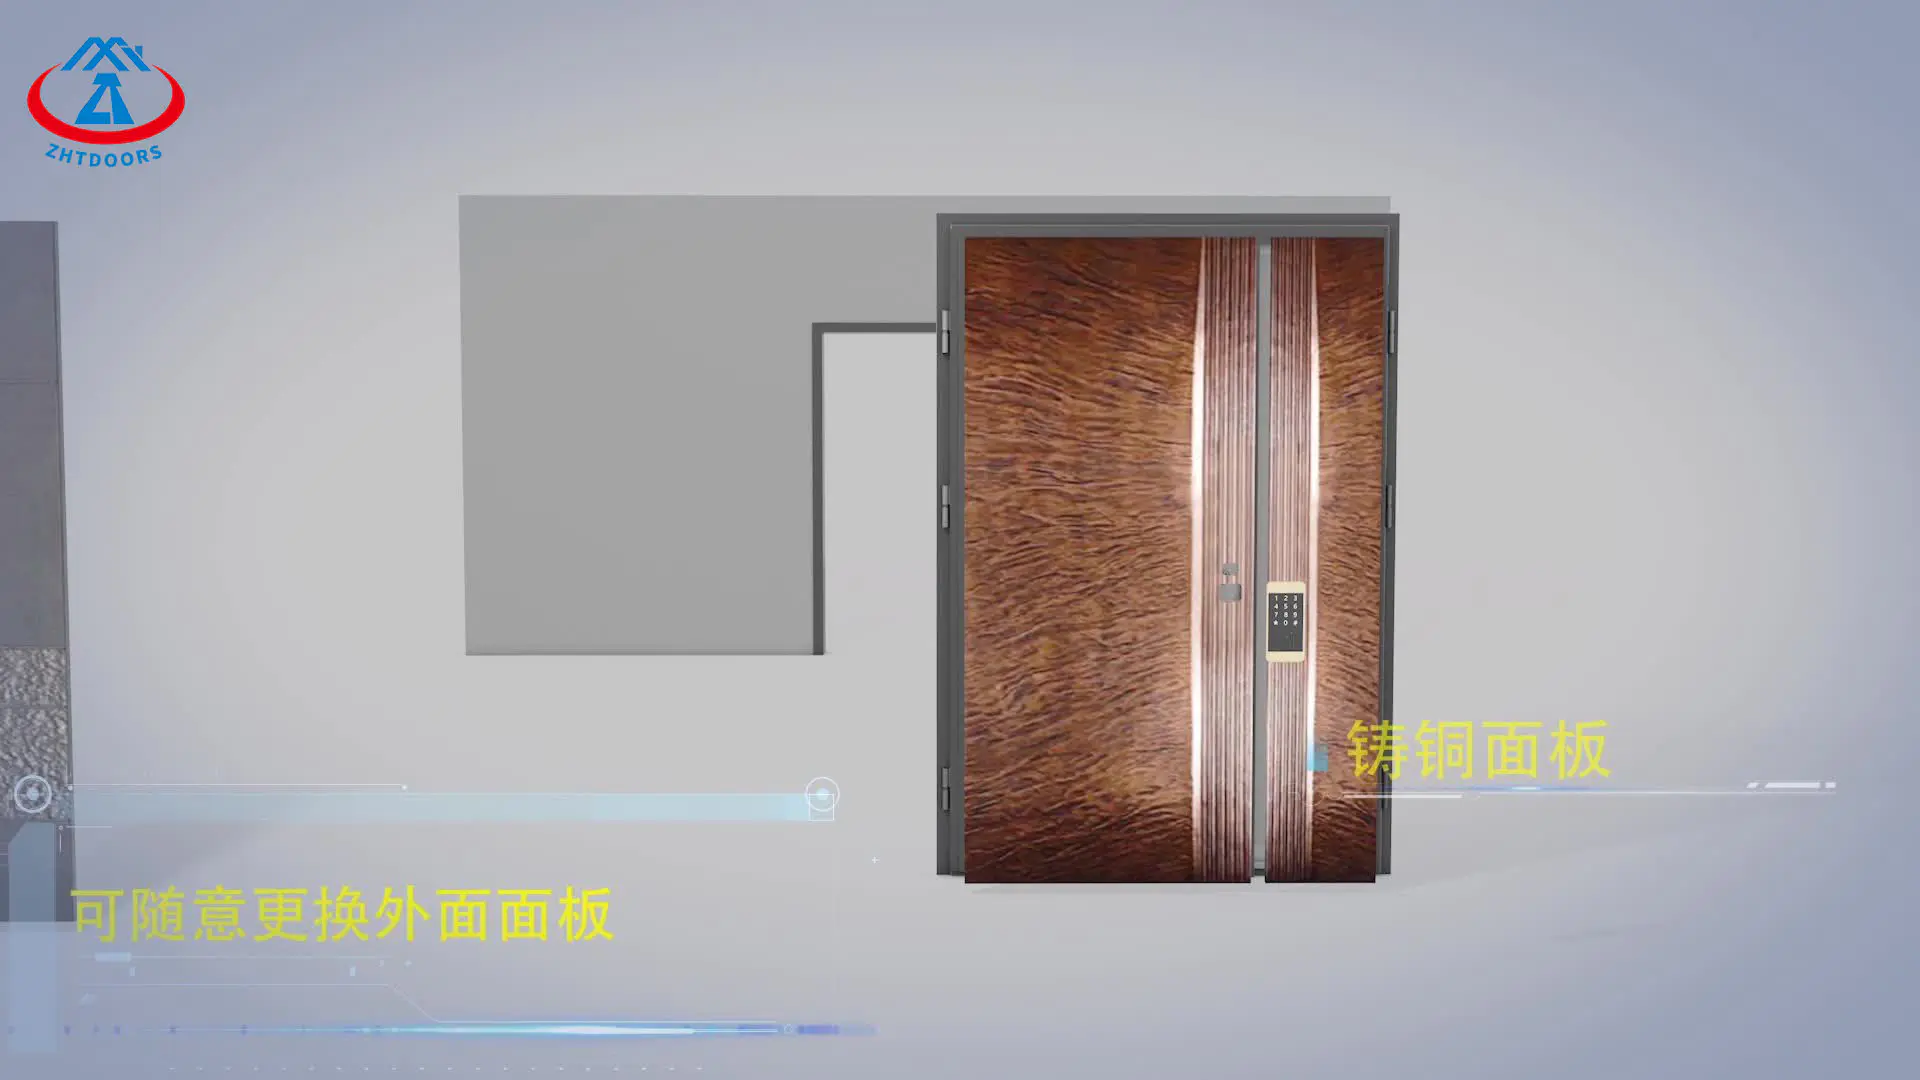 Italian Fiber Glassdoor Apartment Exterior EN Fireproof Secure